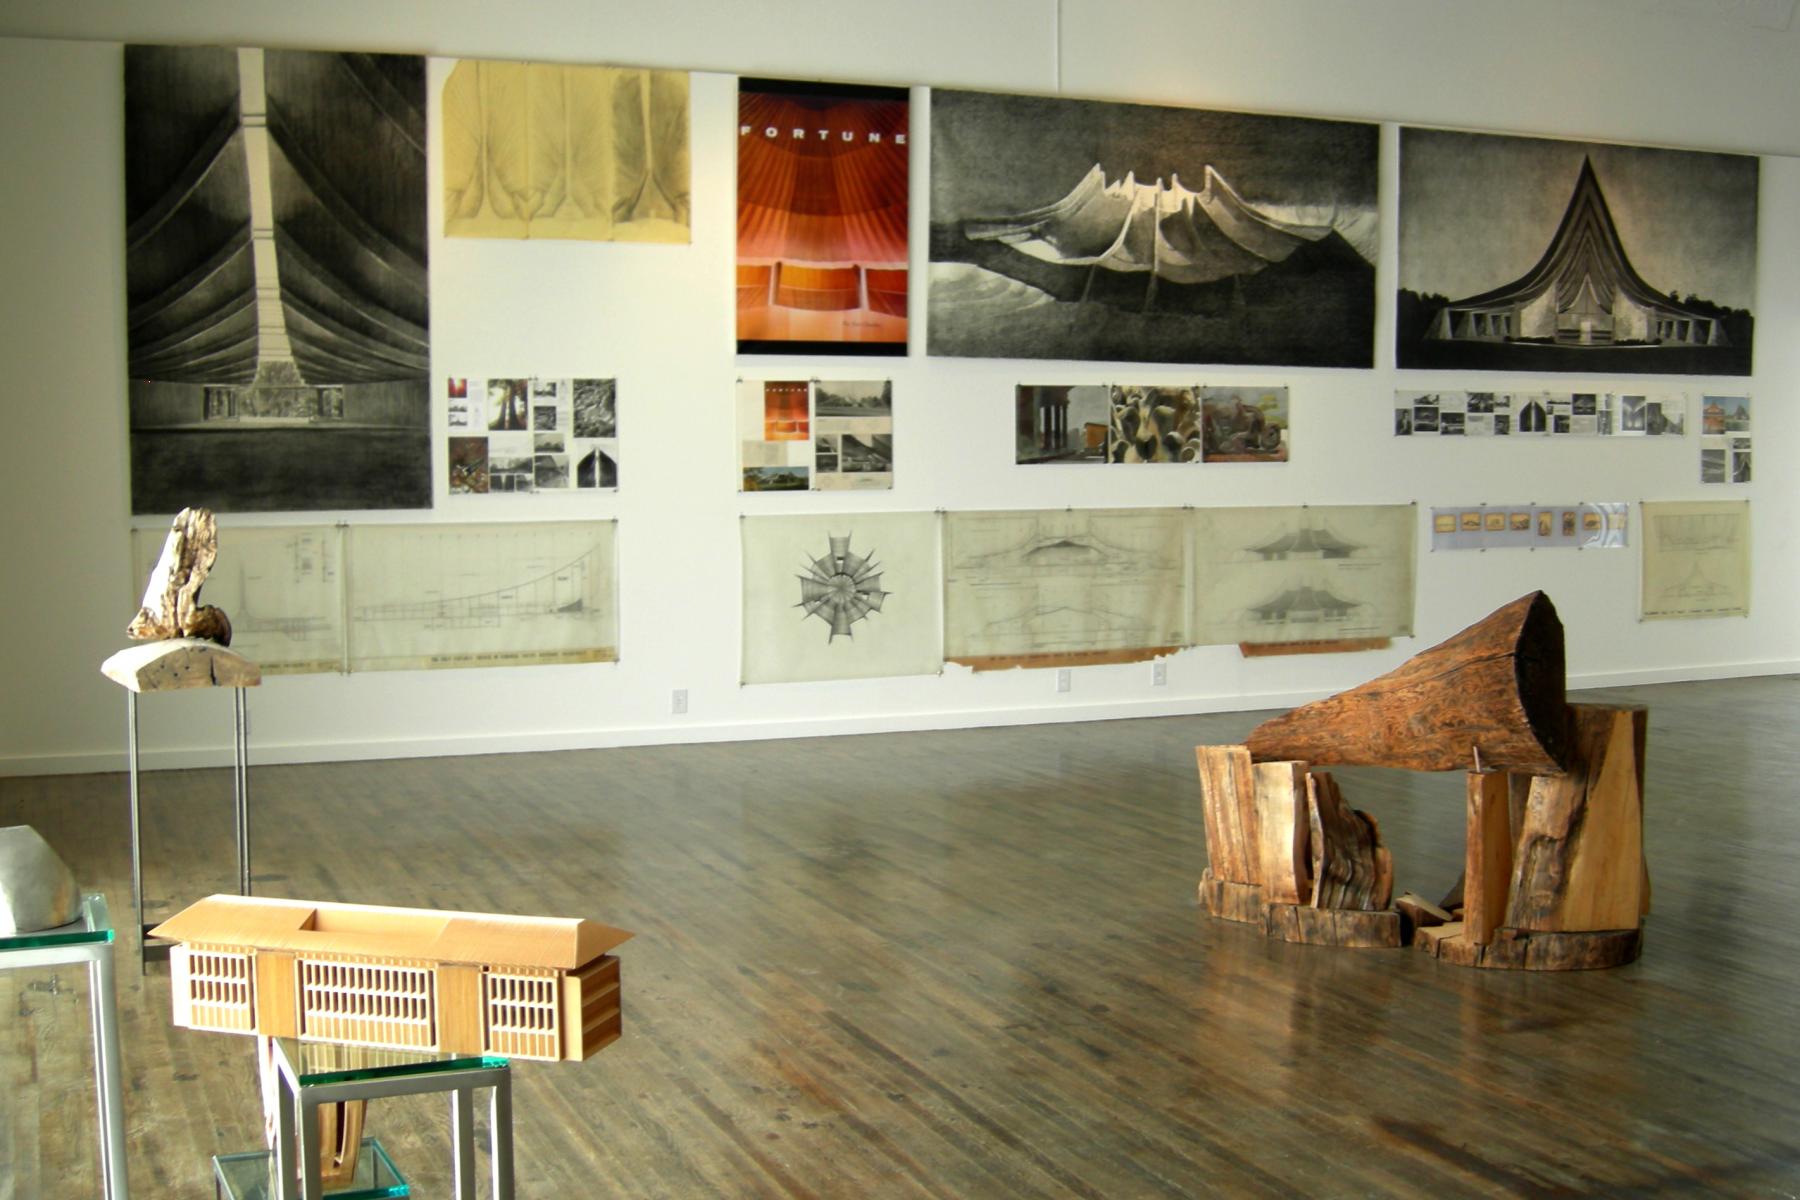 Installation view, North Gallery